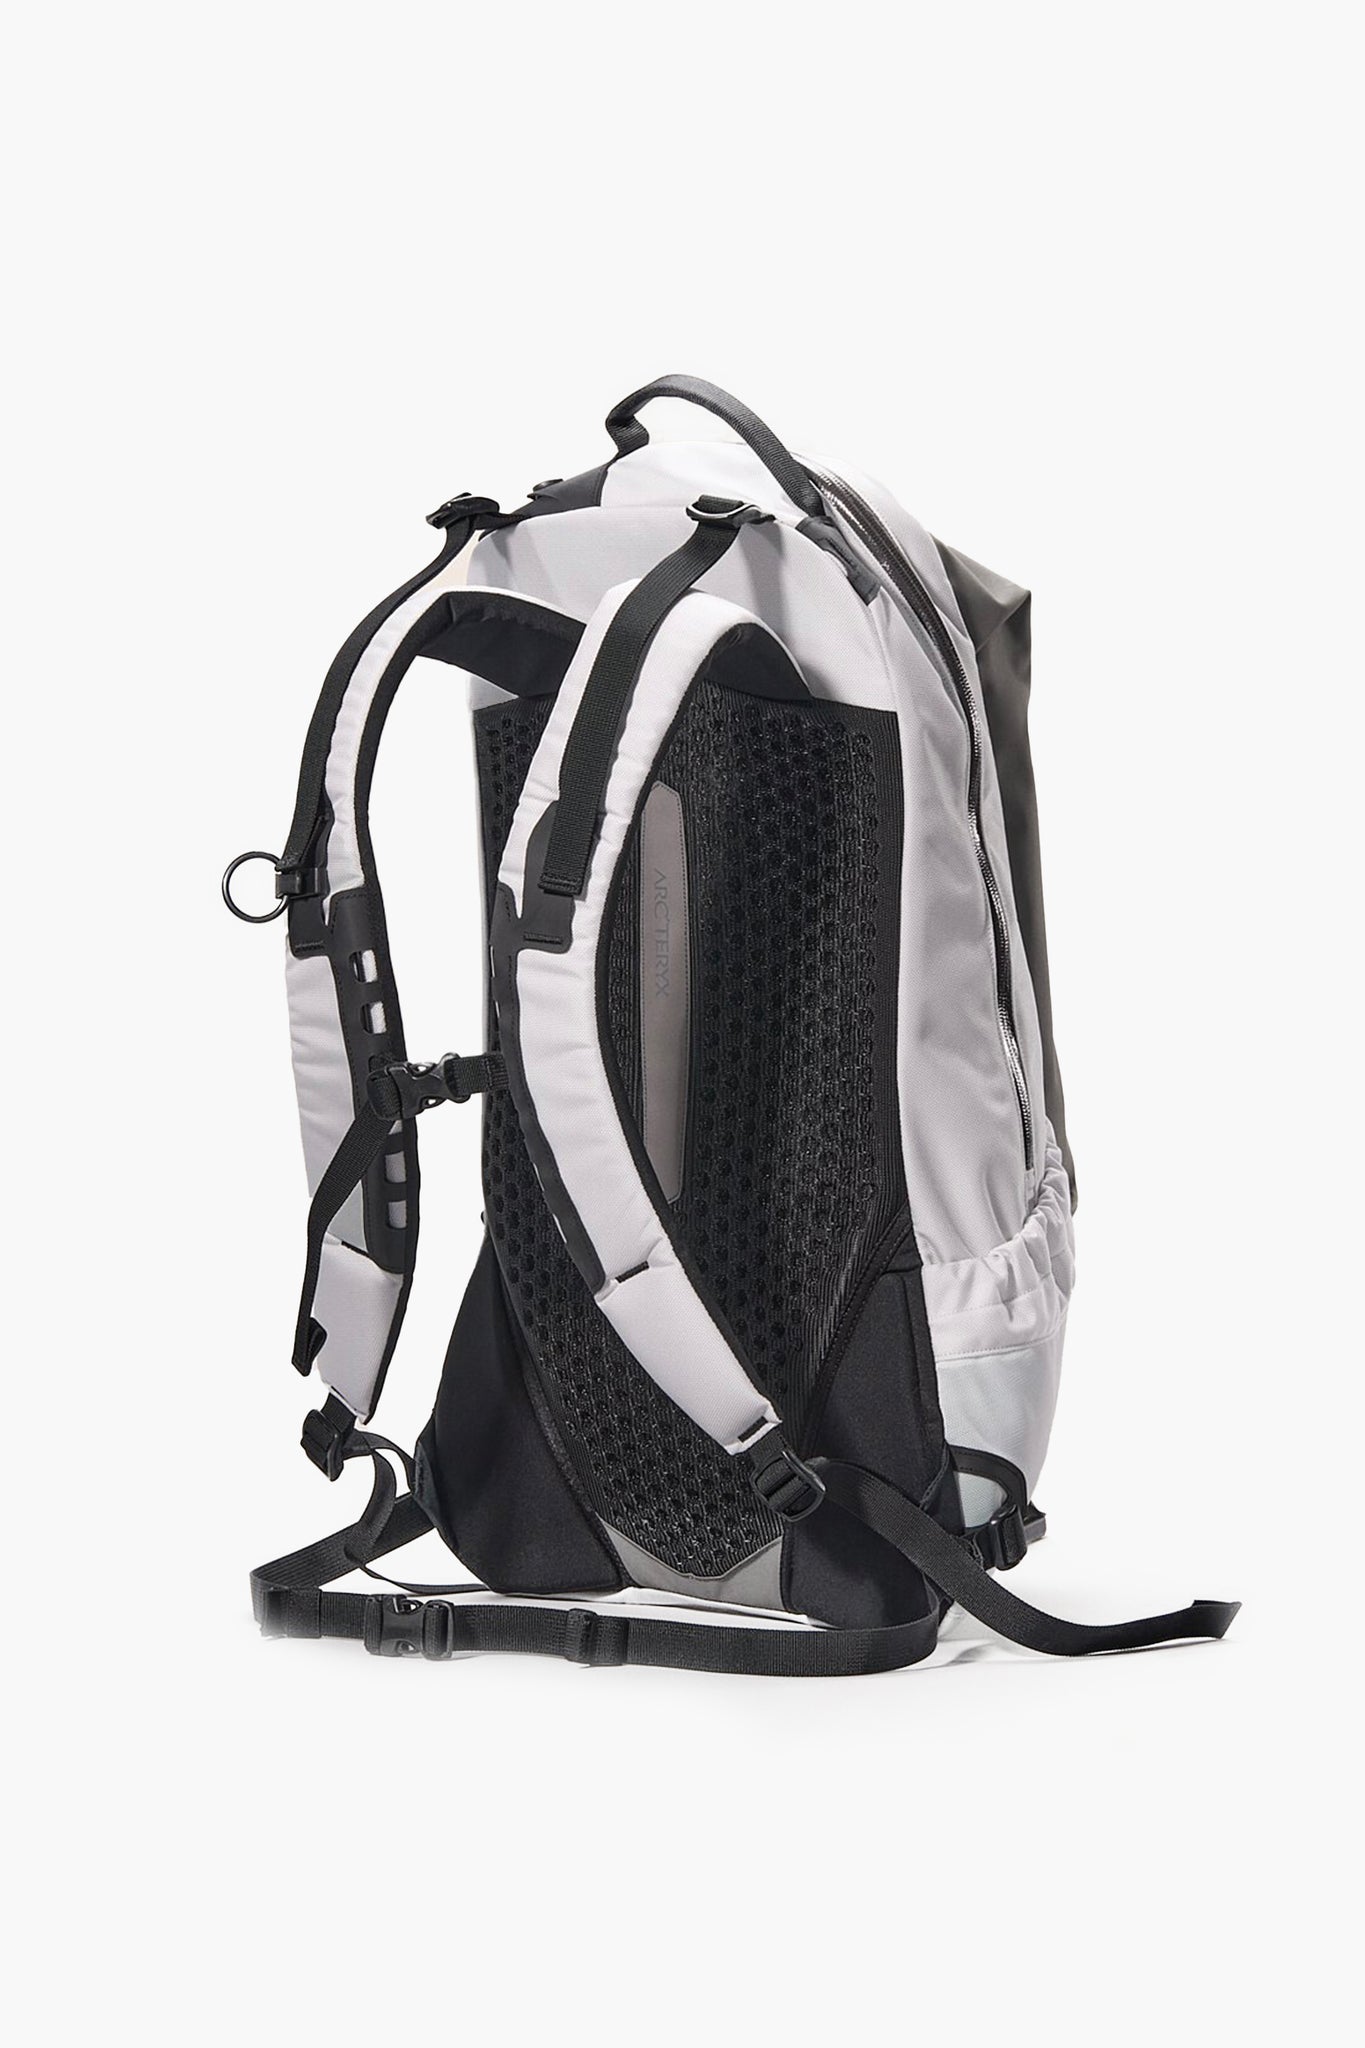 Arc'teryx Arro 22 Backpack in Atmos